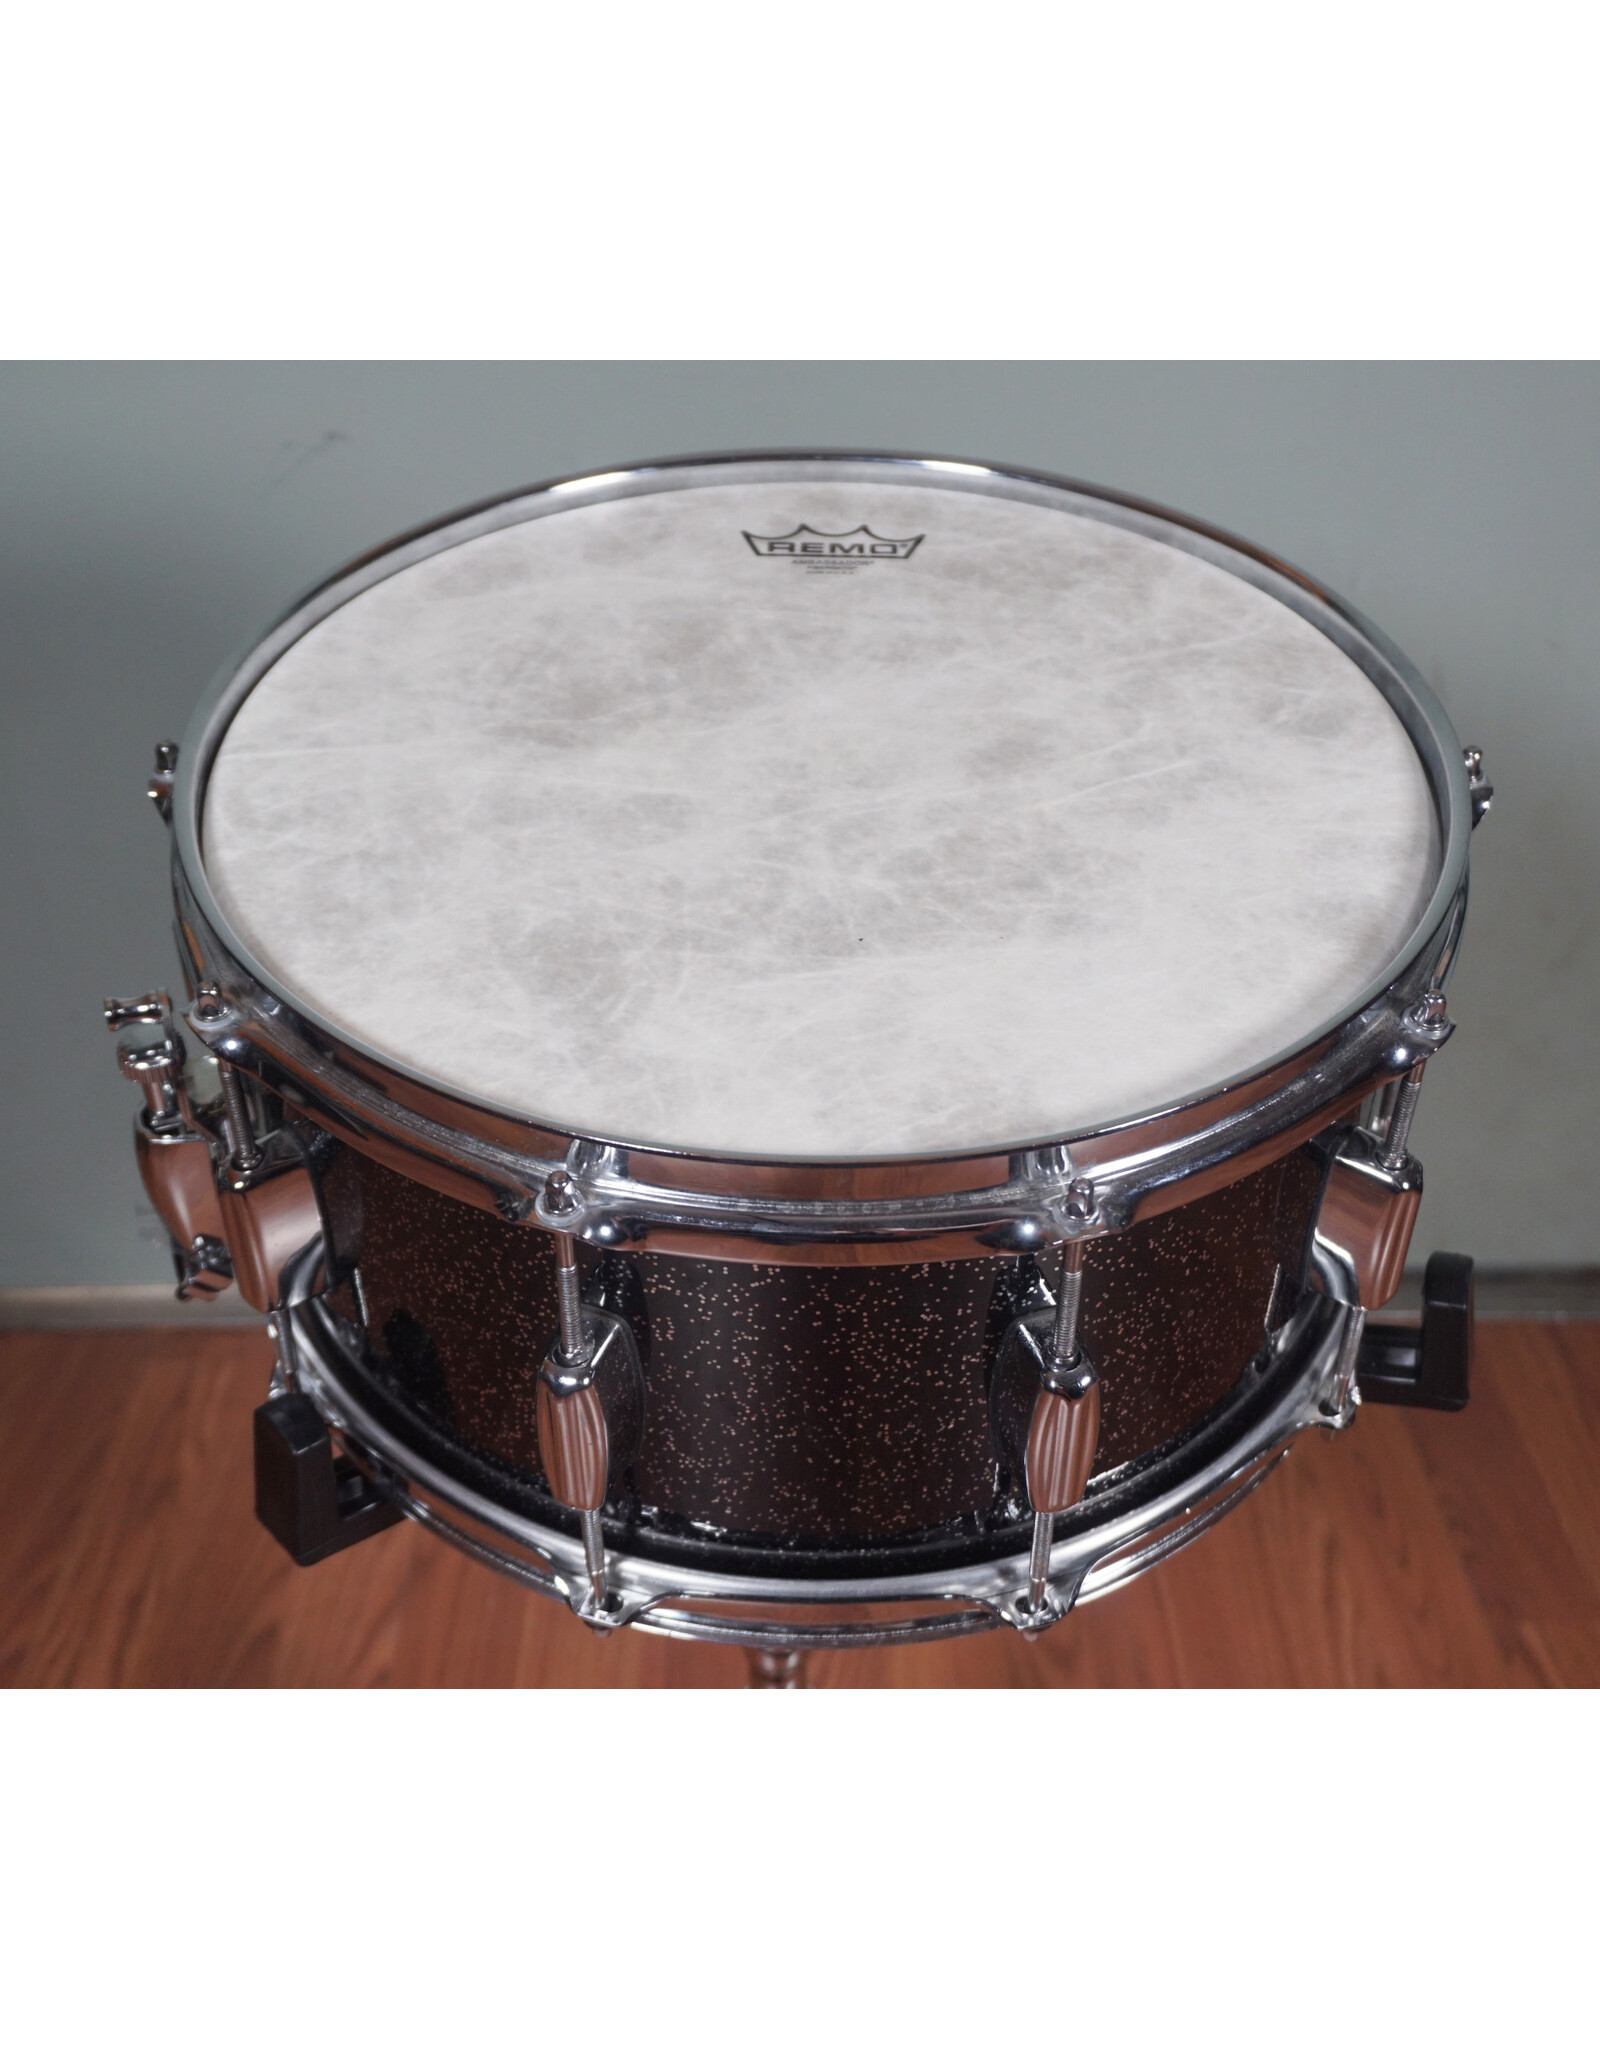 Barton 6.5x14 Maple Snare Drum Black Galaxy, Used